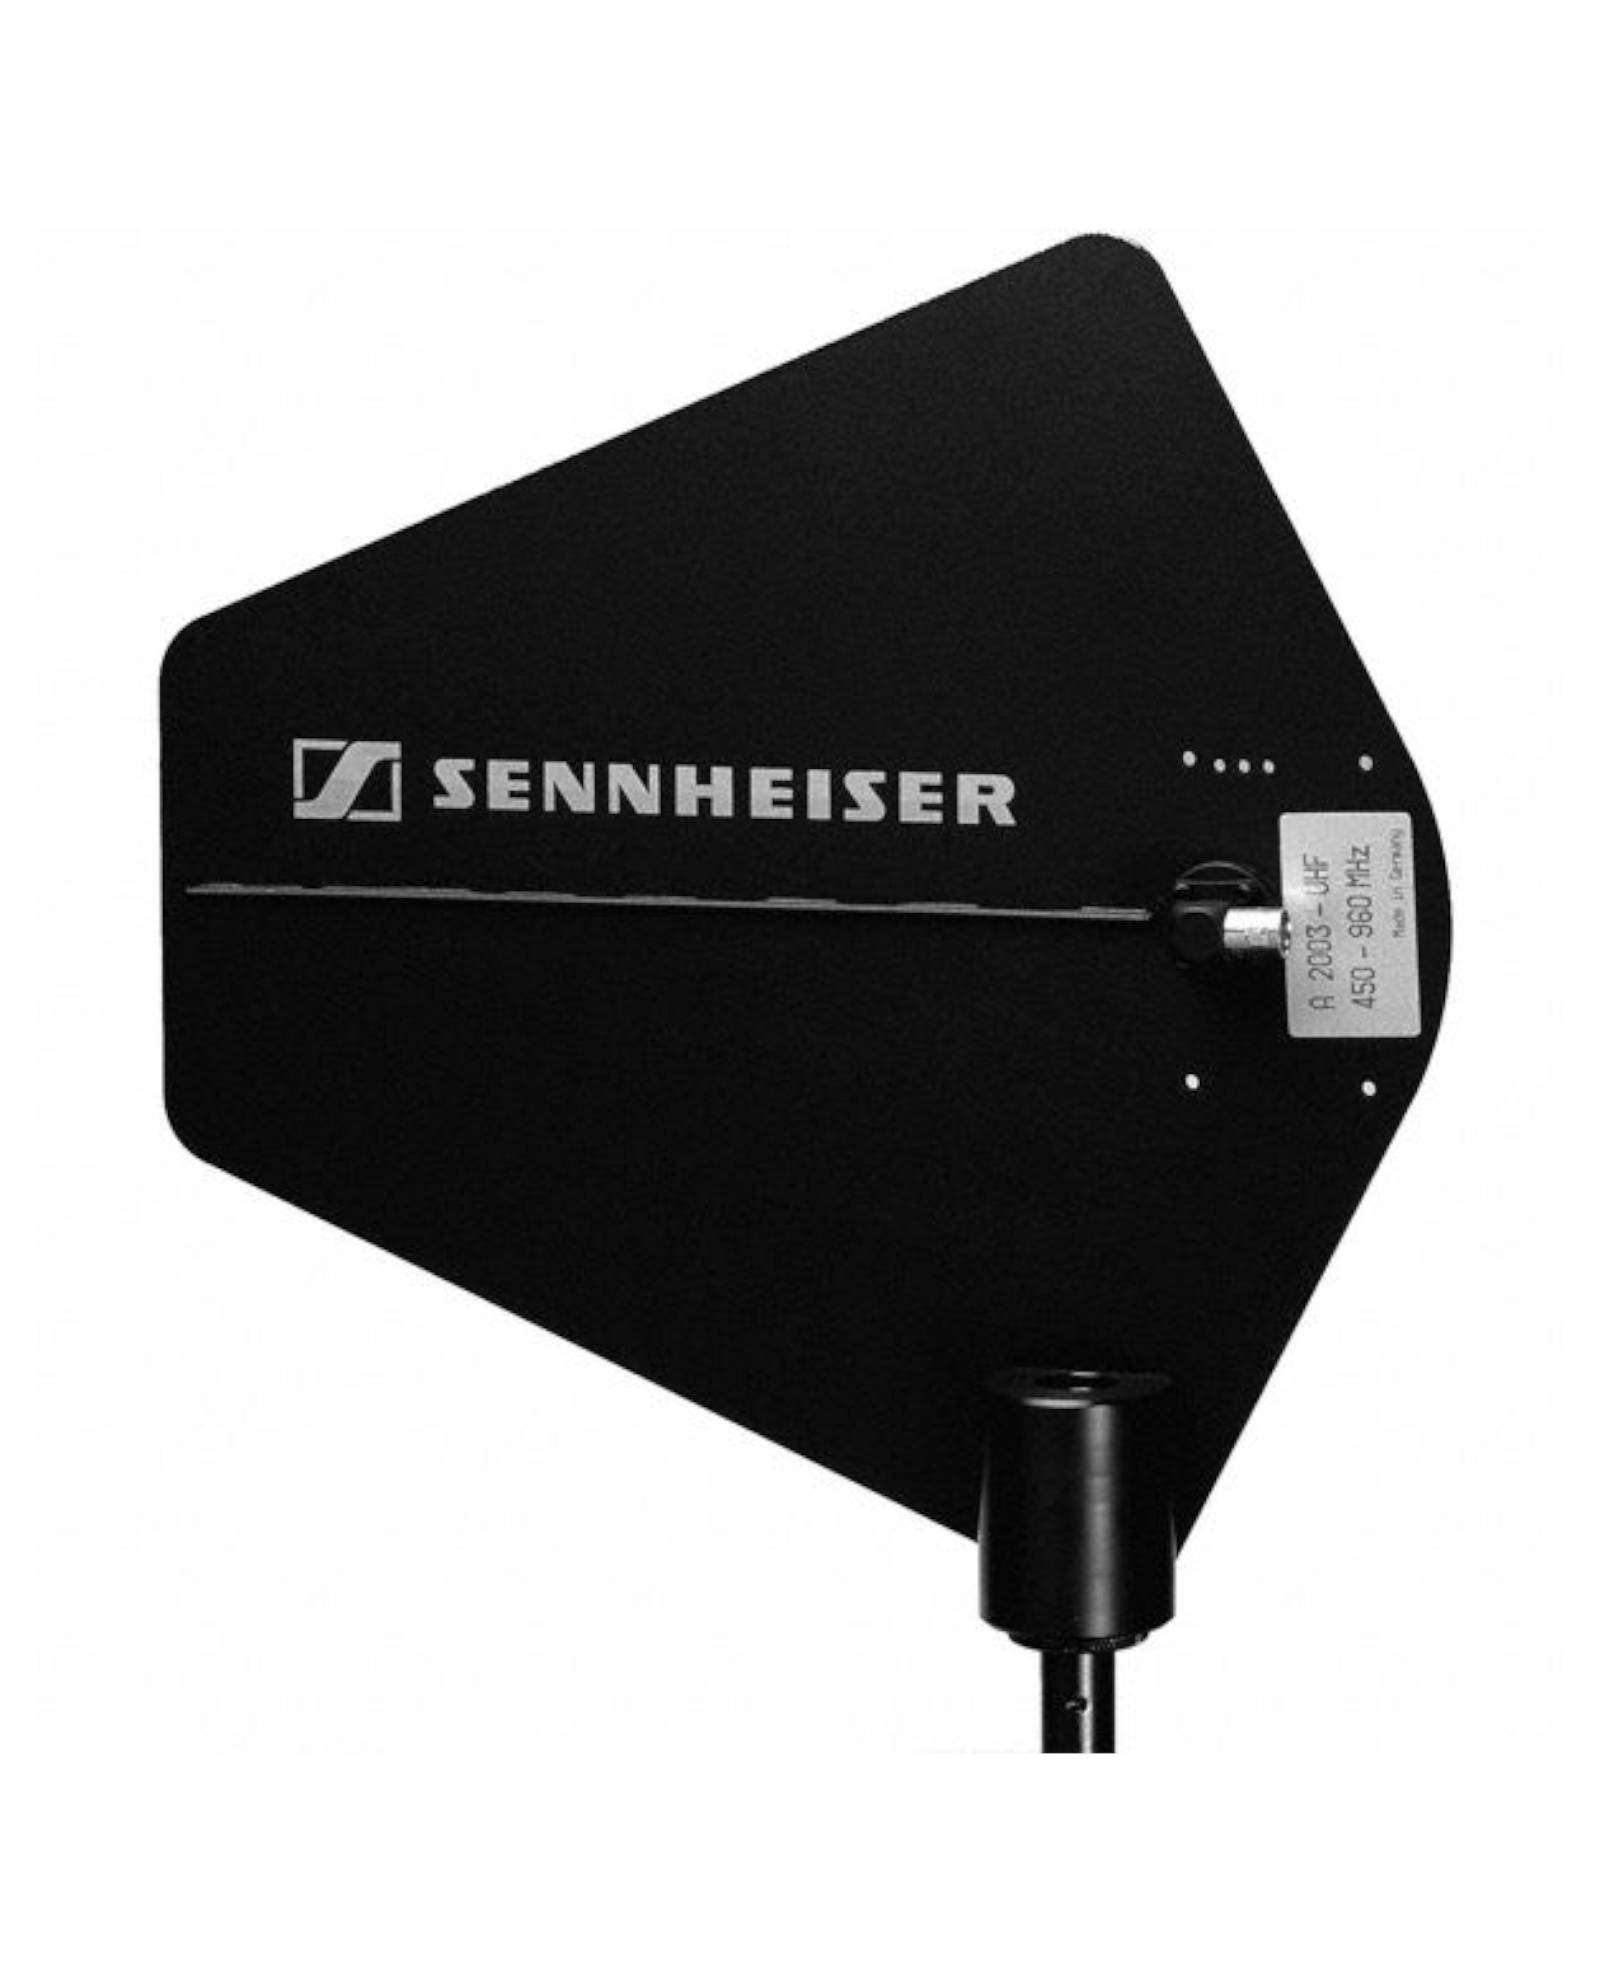 Sennheiser A 2003 Uhf Antenna